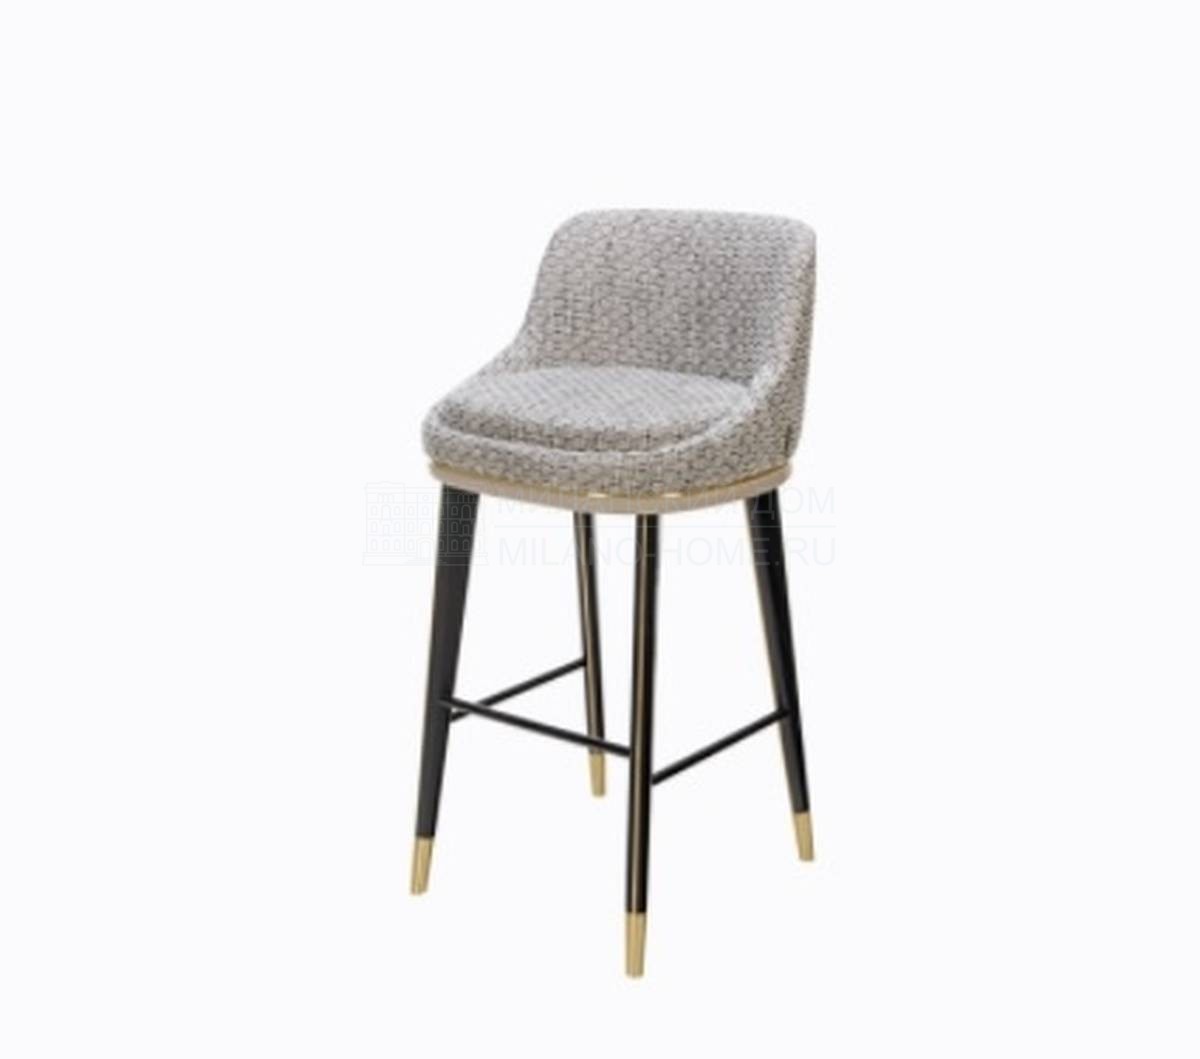 Барный стул Misool bar stool из Португалии фабрики FRATO